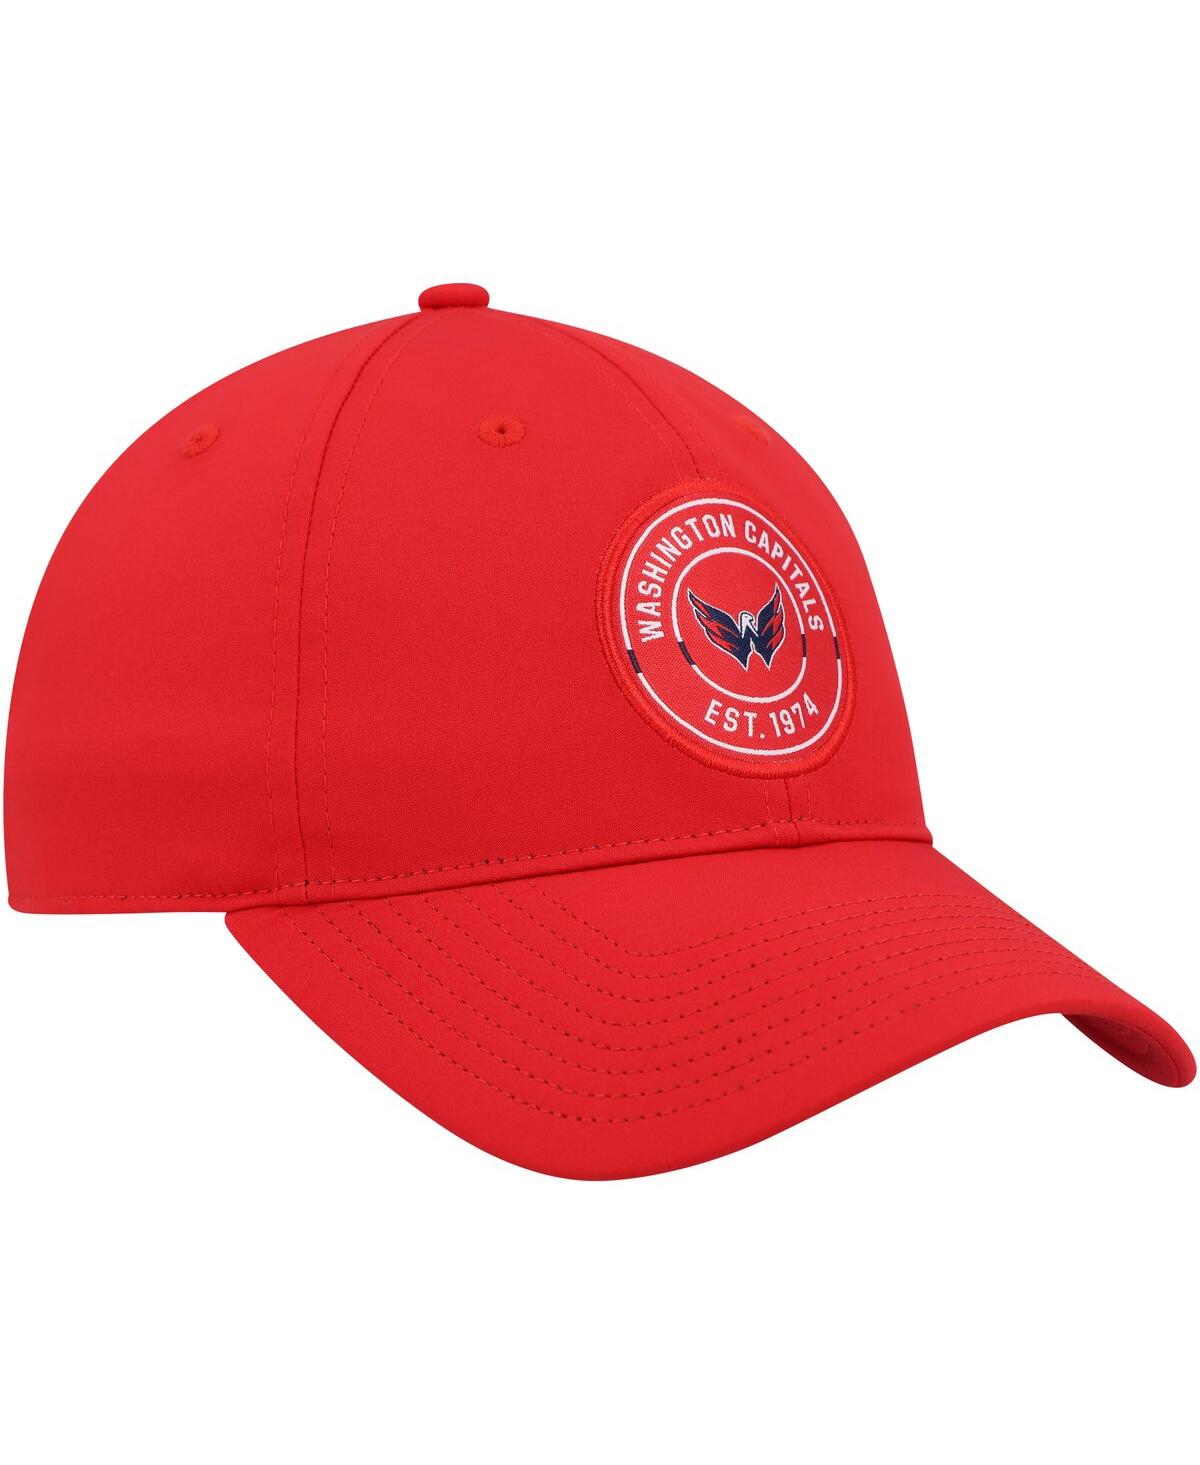 Shop Adidas Originals Men's Adidas Red Washington Capitals Team Circle Slouch Adjustable Hat